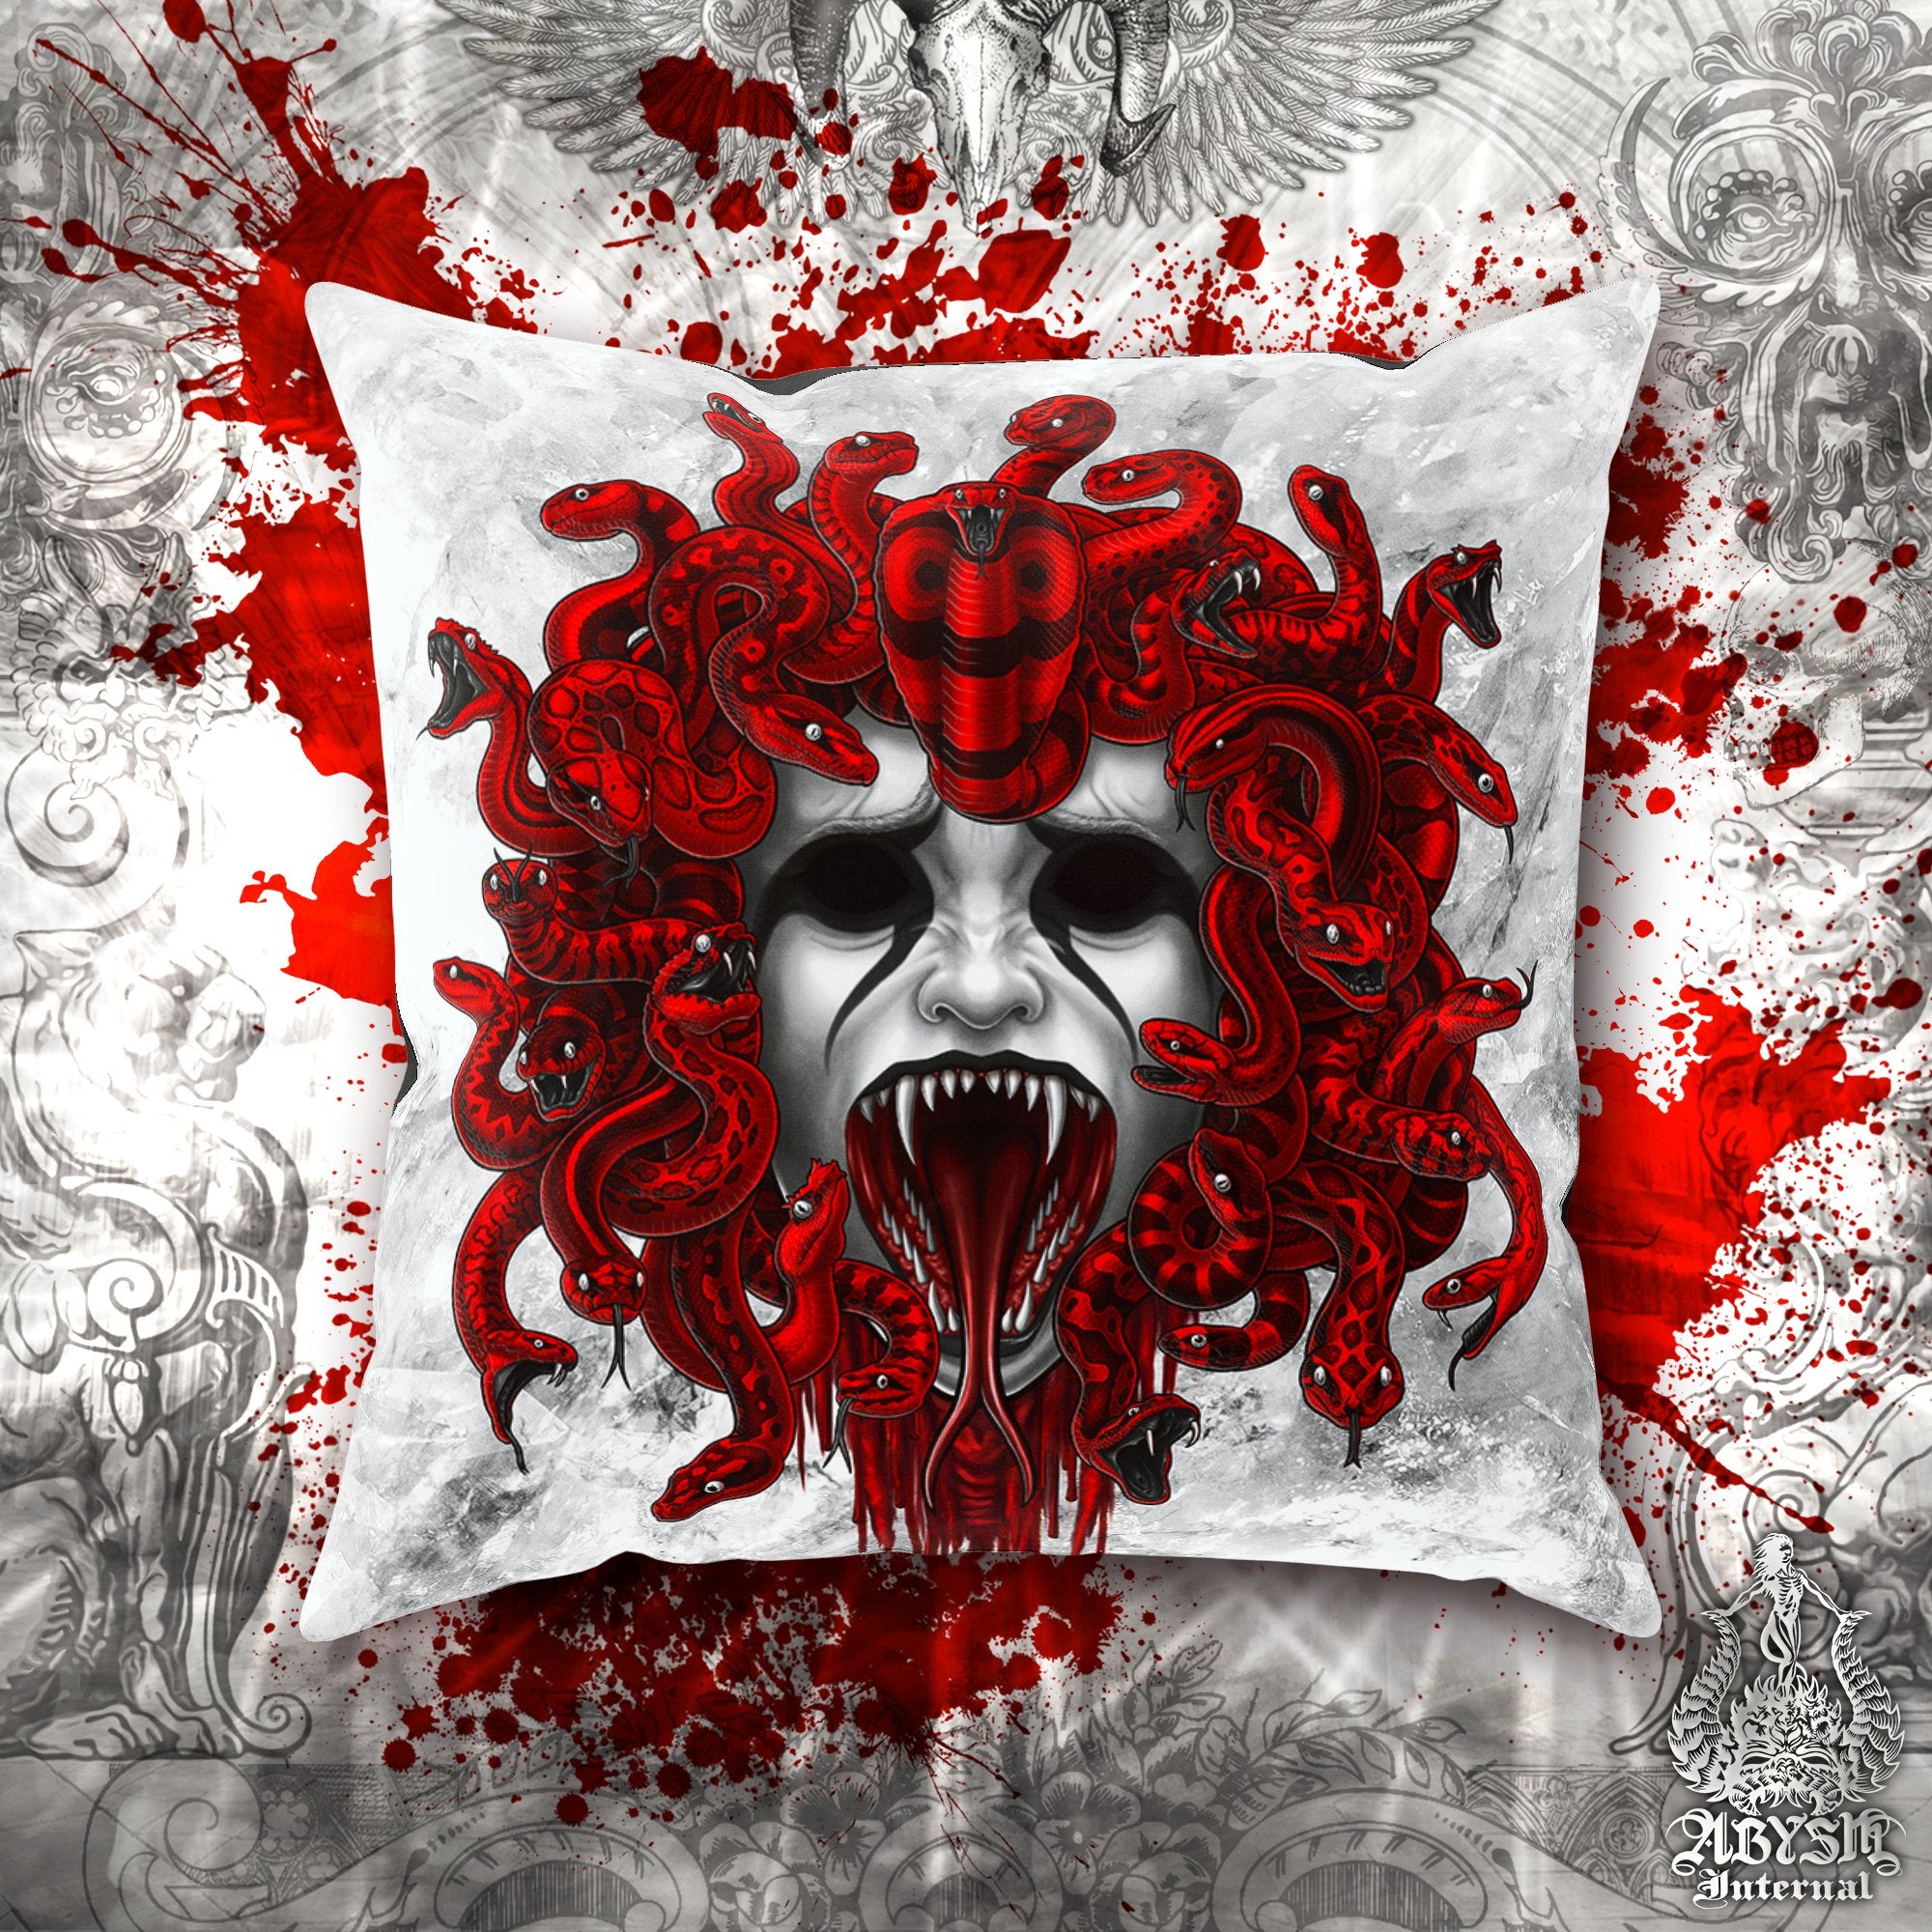 Medusa Throw Pillow, Decorative Accent Pillow, Square Cushion Cover, Skull Art, White Goth Room Decor, Horror Art, Alternative Home - 2 Faces, 3 Colors - Abysm Internal